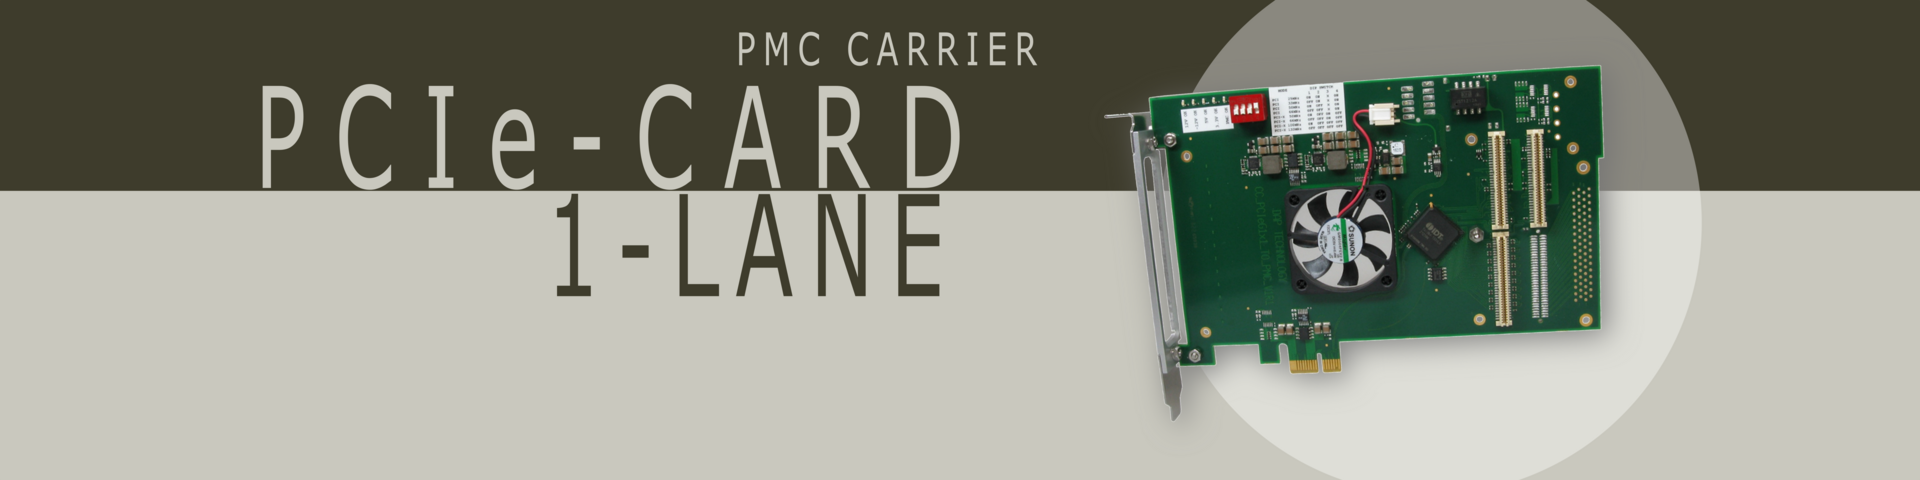 Accessories - PMC-Carrier PCIex1